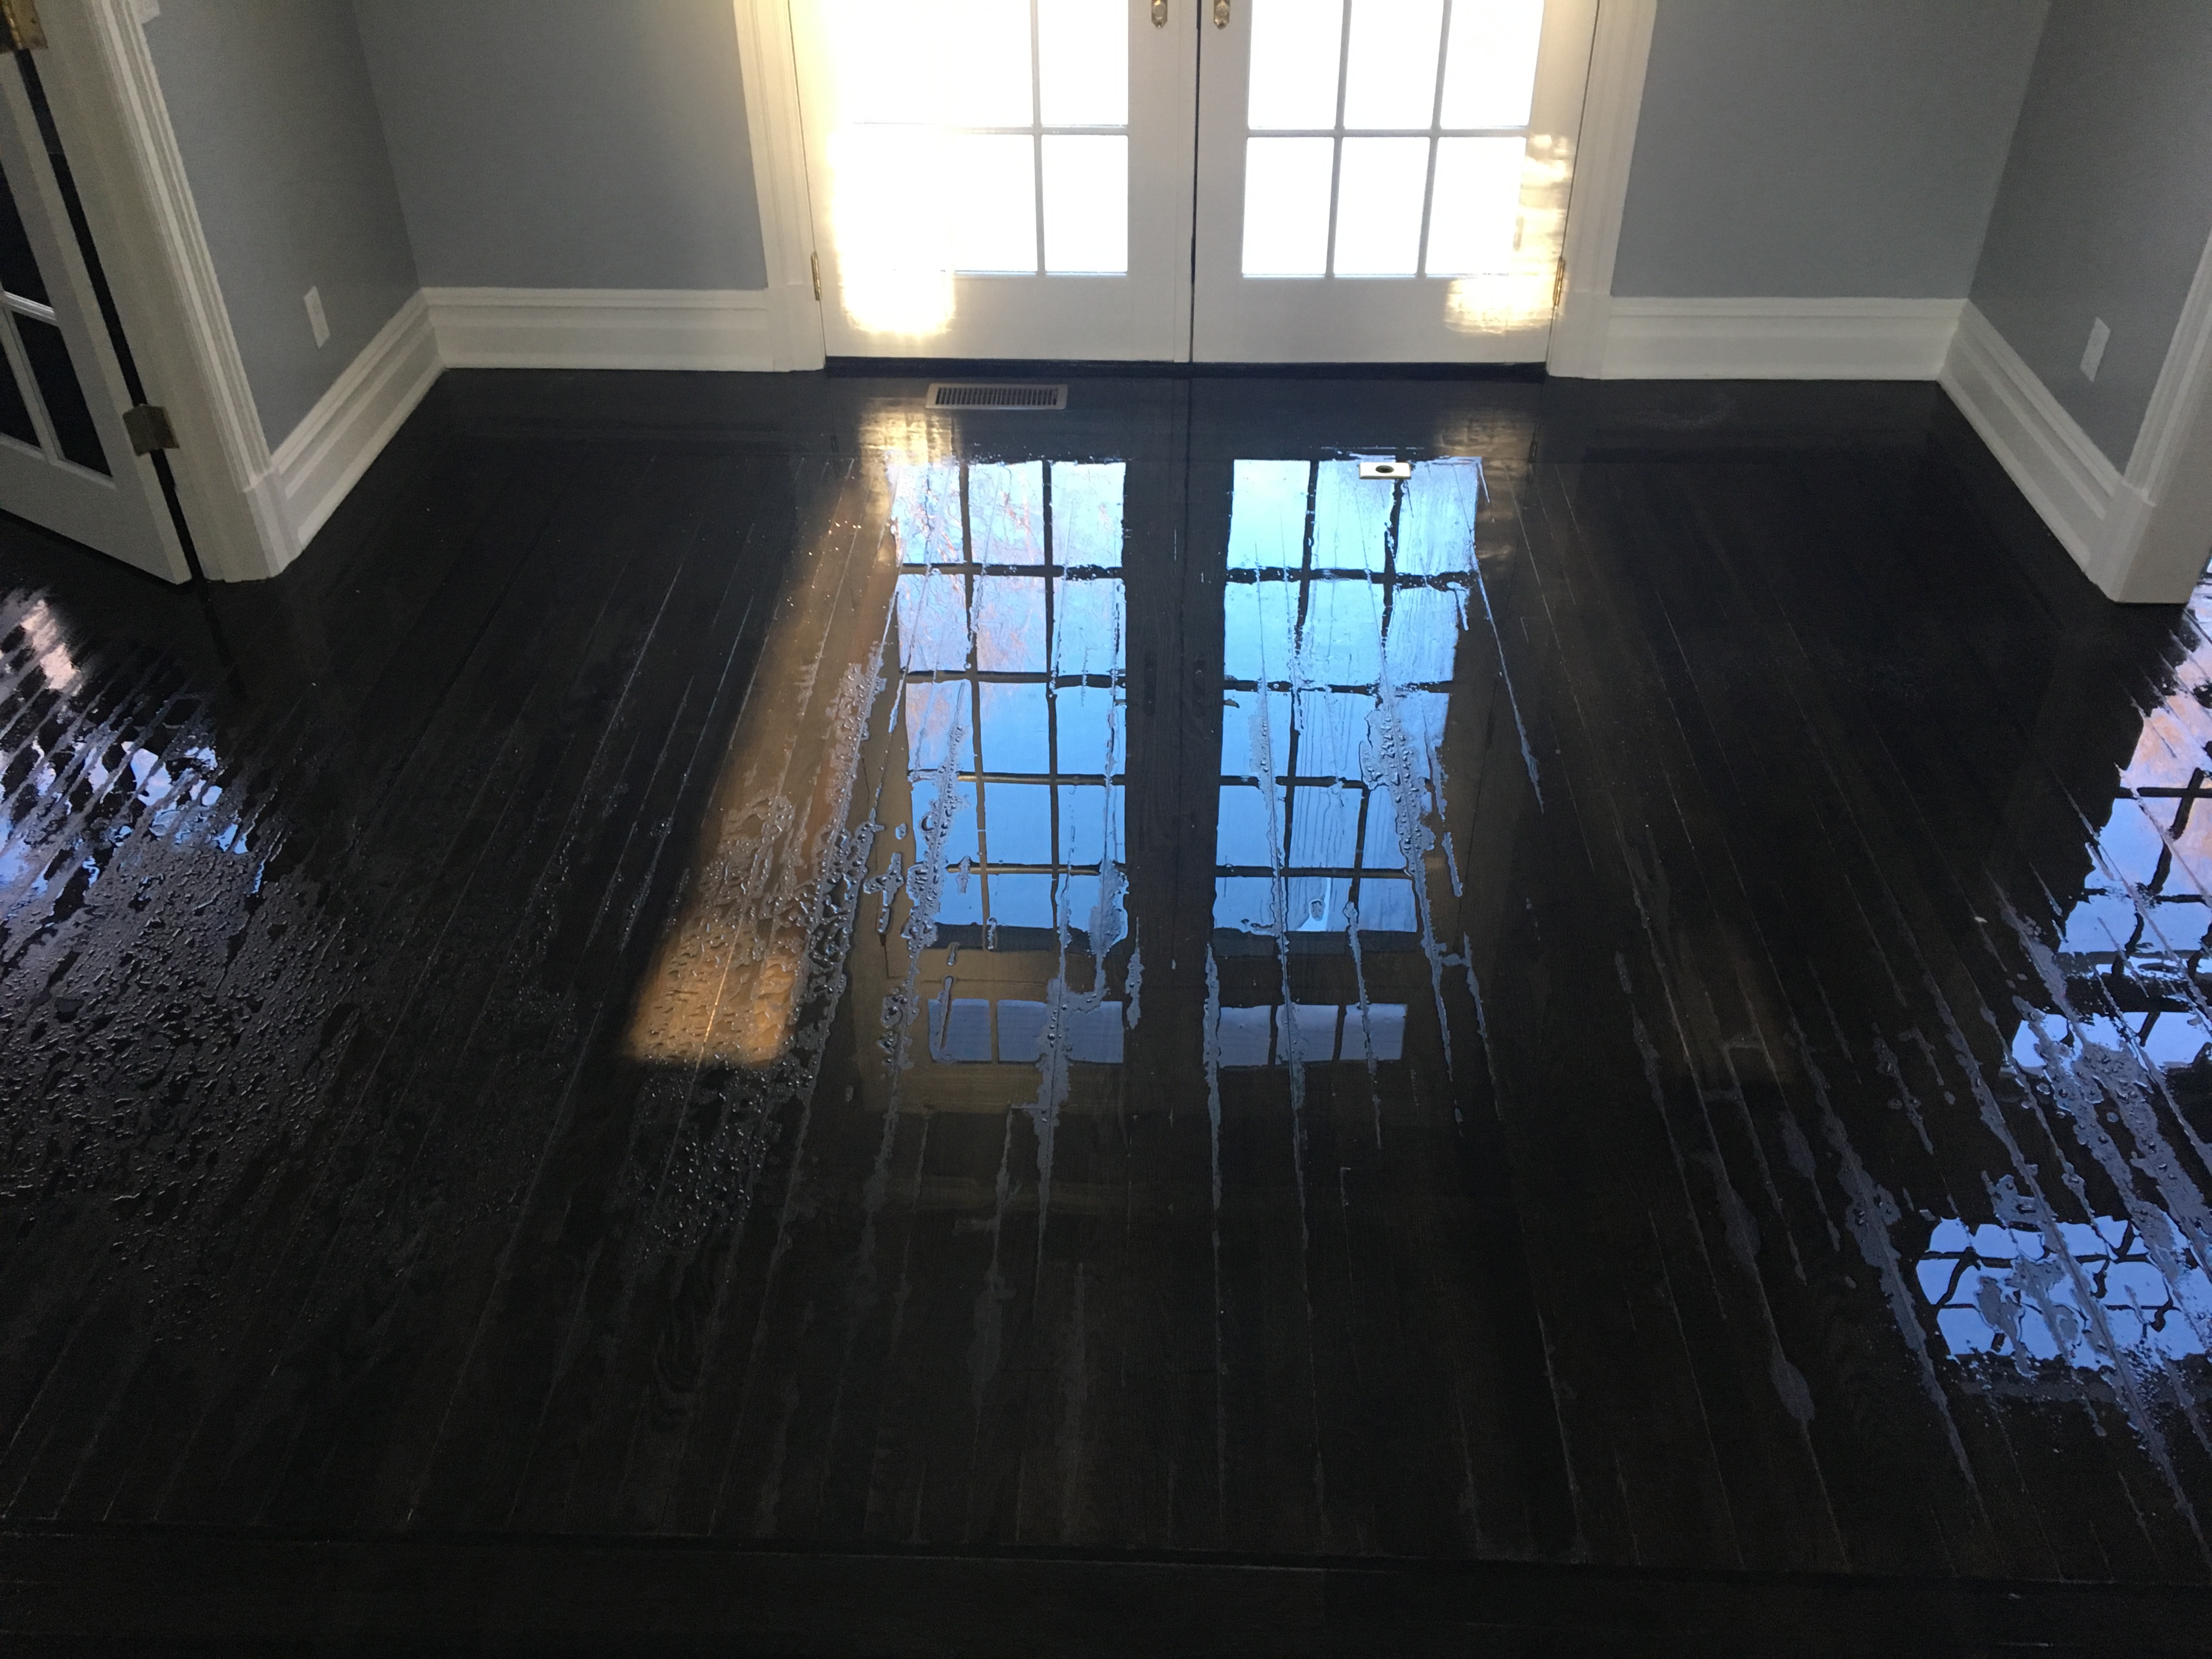 Water damage on wood floors.